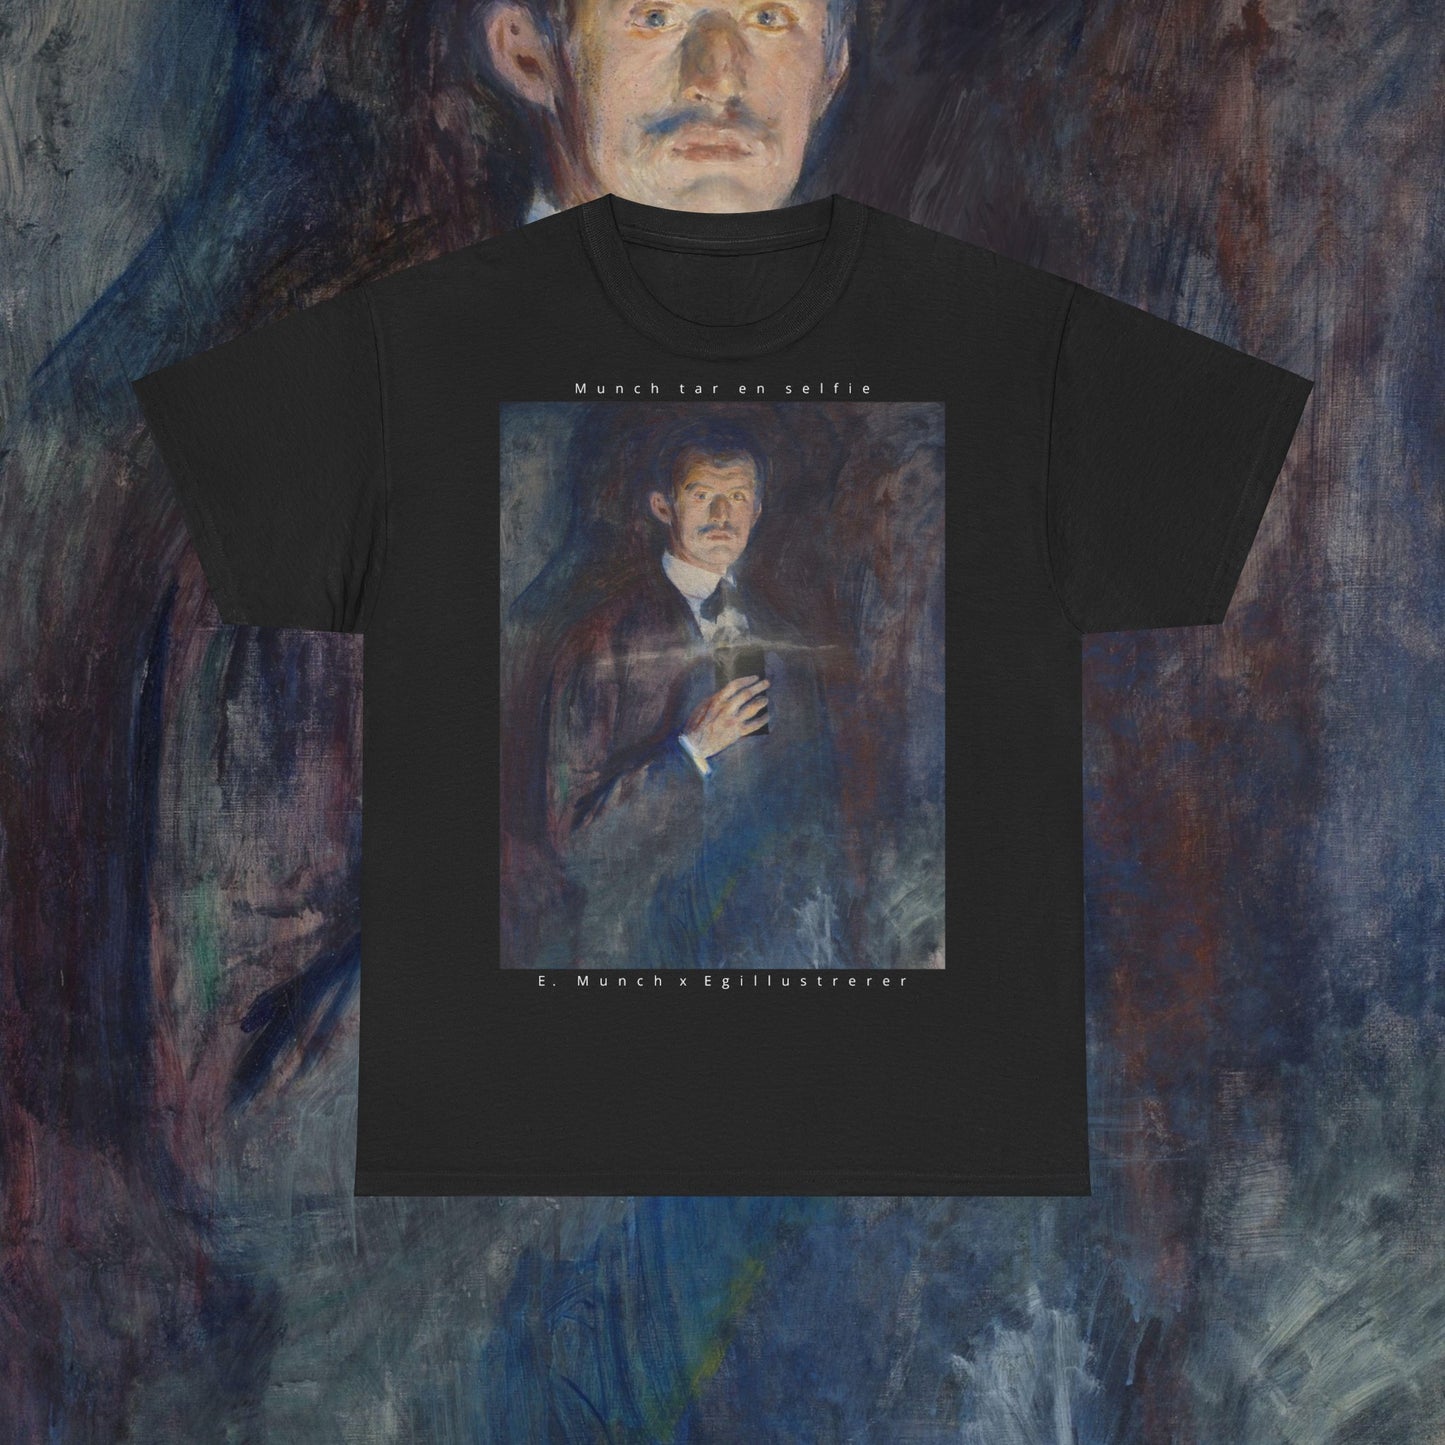 Munch takes a selfie - Classic t-shirt